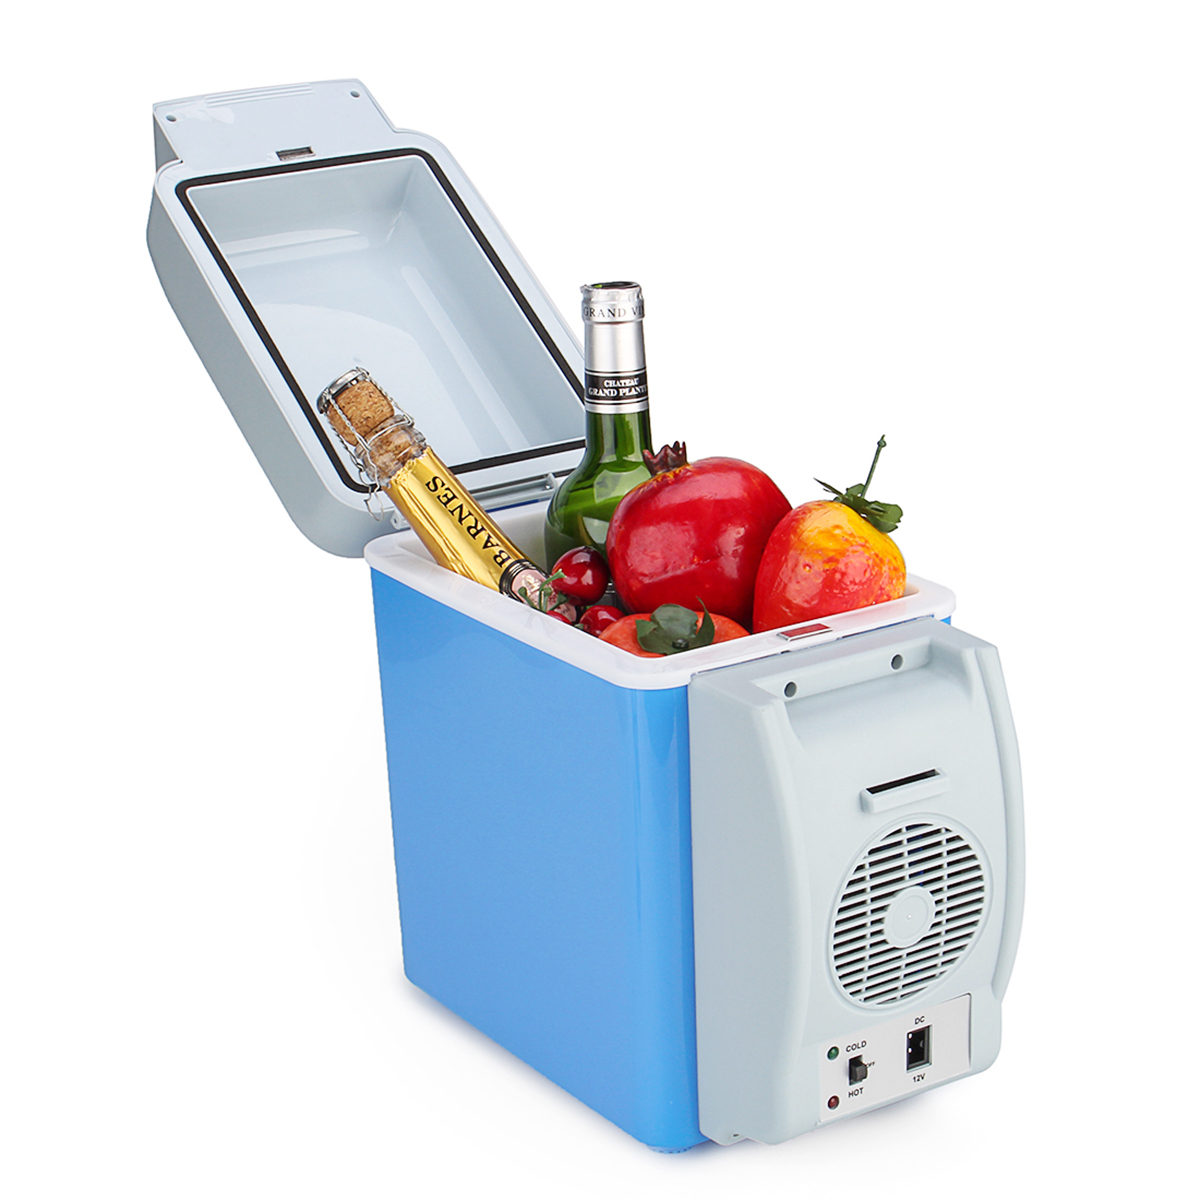 

12V 7.5L синий Портативный Авто Холодильник Морозильник Cooler Warmer Коробка Кемпинг Холодильник